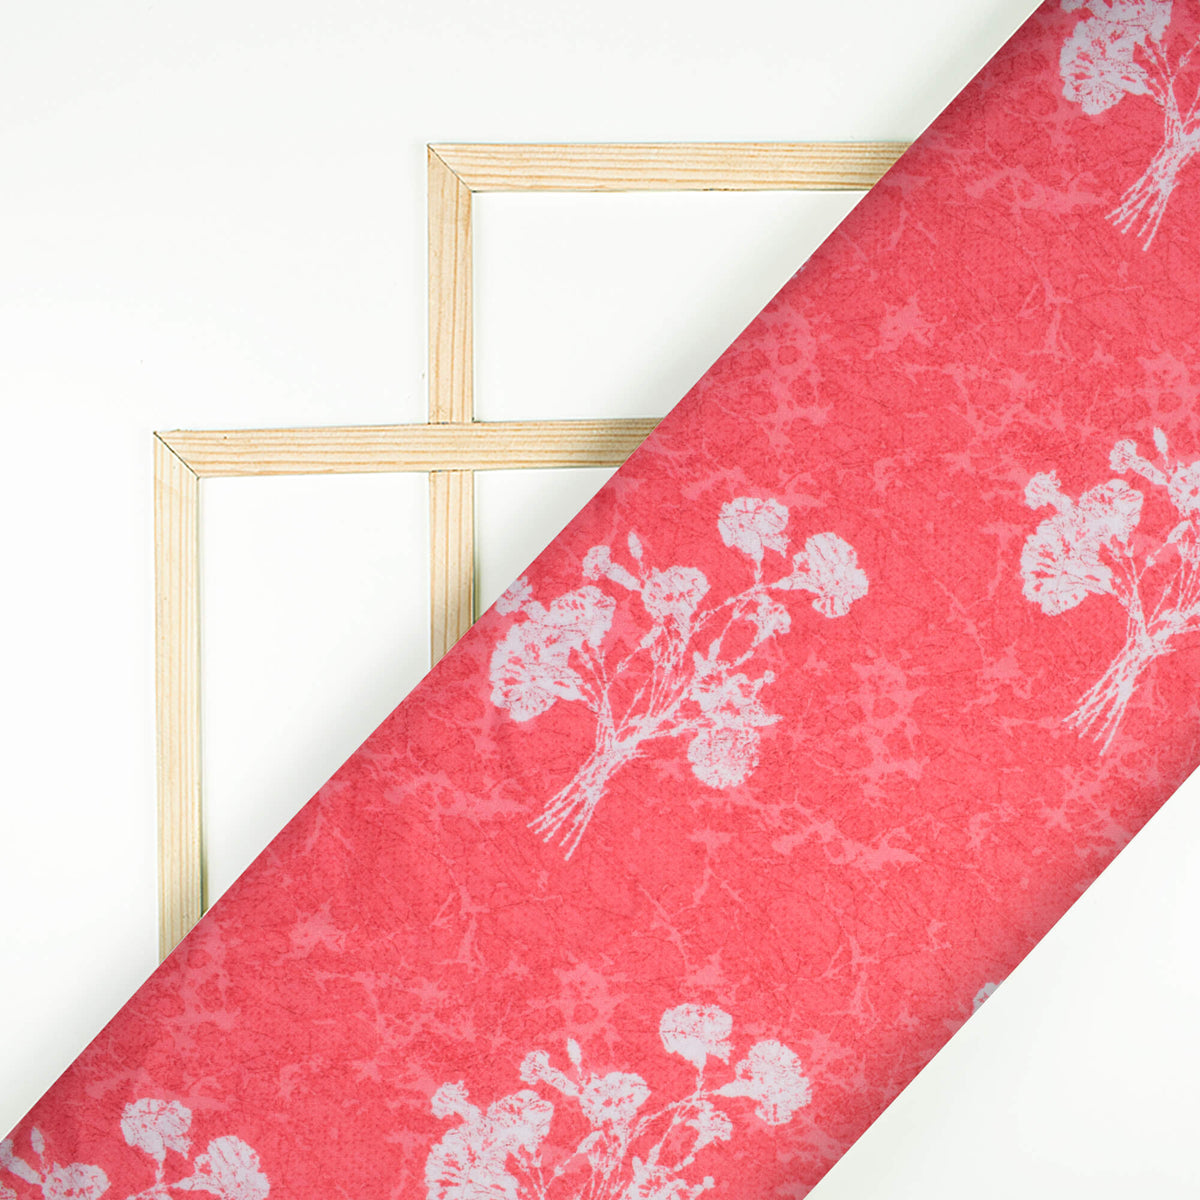 Punch Pink And White Floral Pattern Digital Print Premium Lush Satin Fabric